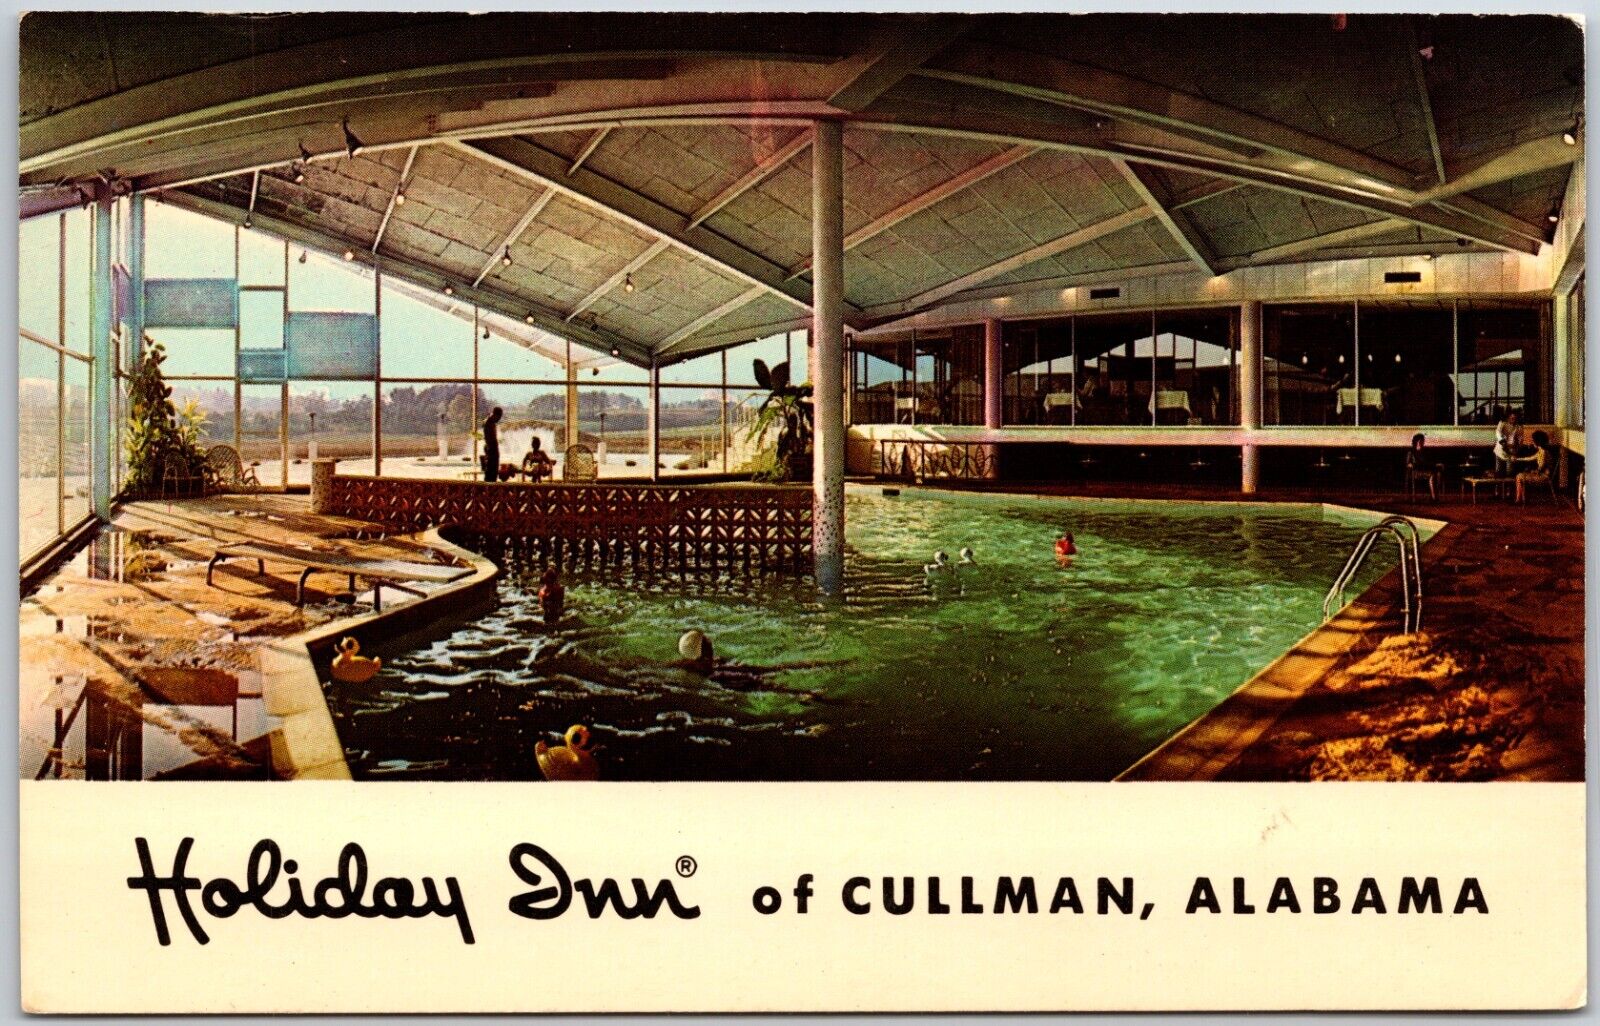 Holliday Inn of Cullman, Alabama - Postcard